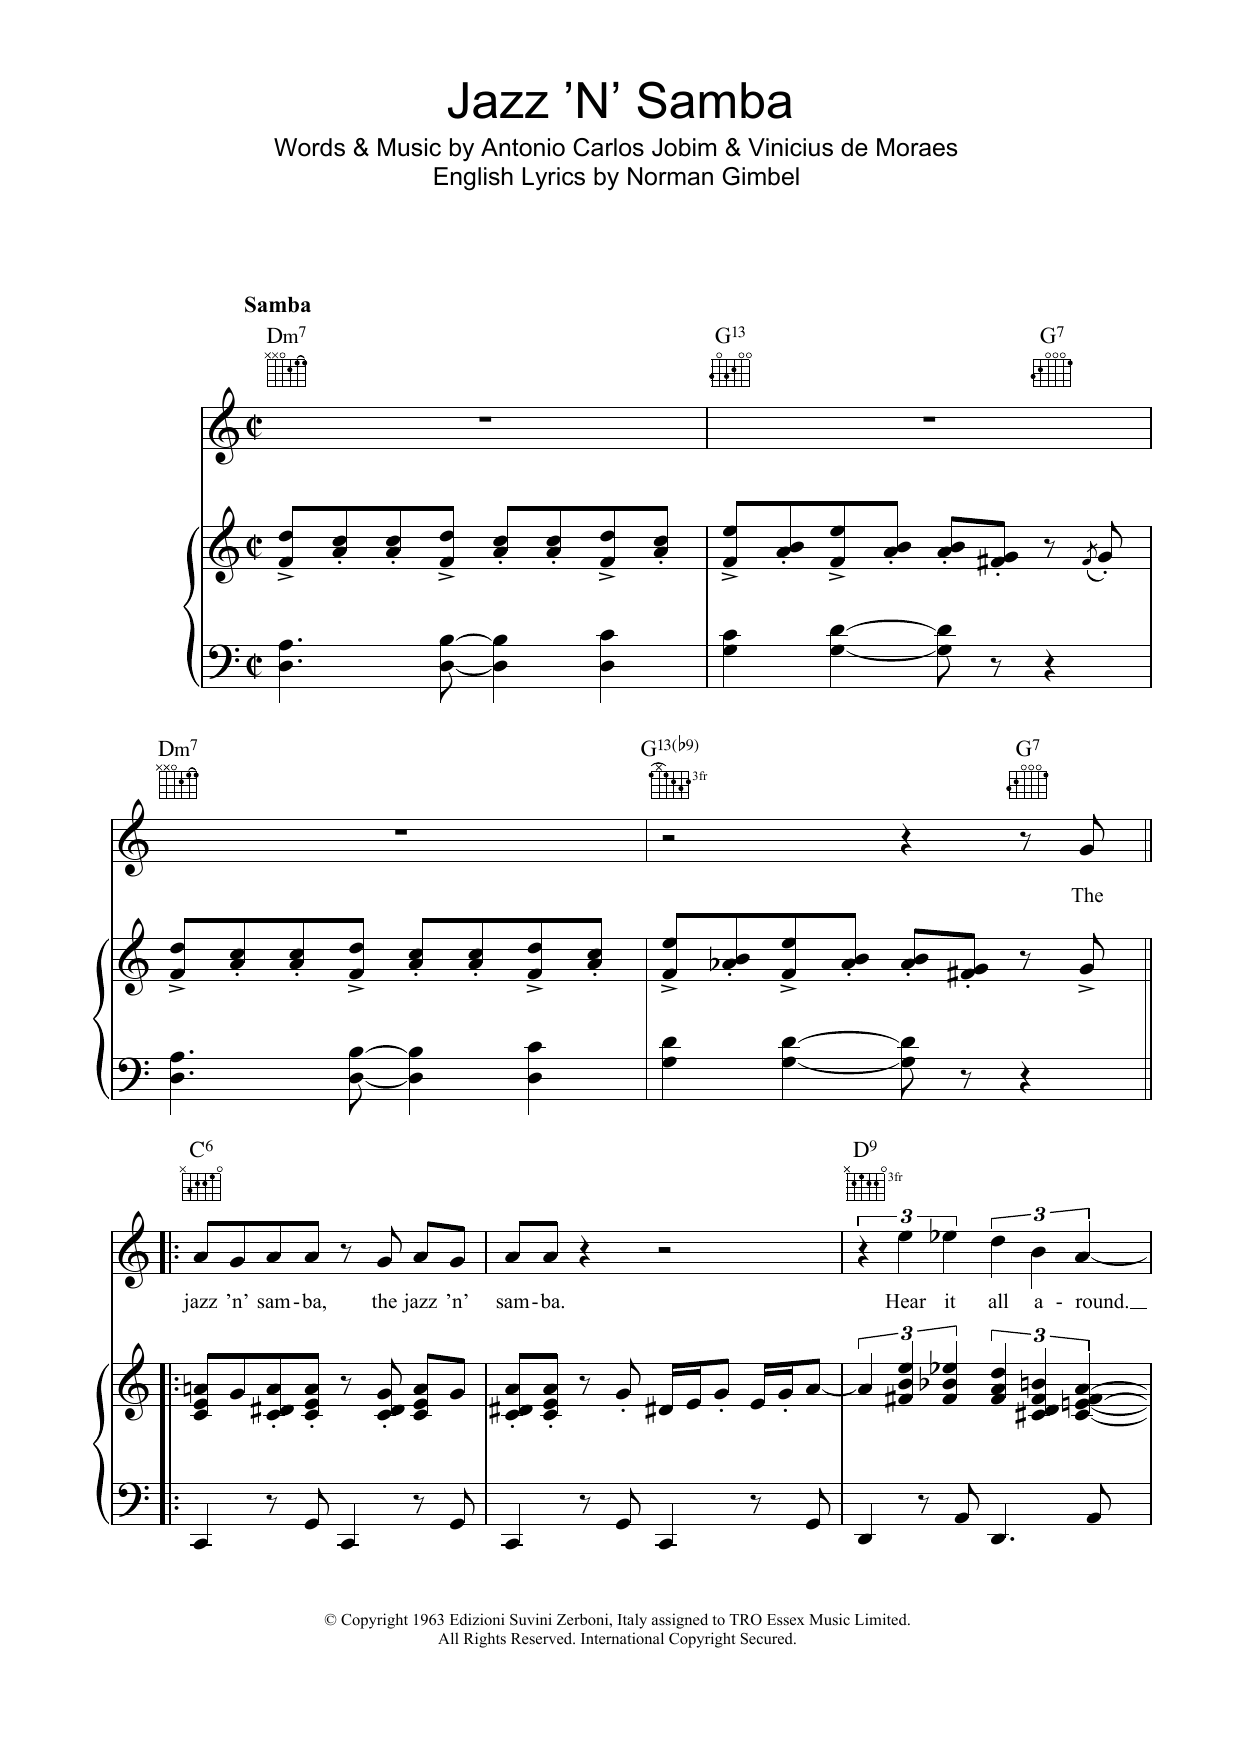 Antonio Carlos Jobim Jazz 'N' Samba (So Danco Samba) Sheet Music Notes & Chords for Melody Line, Lyrics & Chords - Download or Print PDF